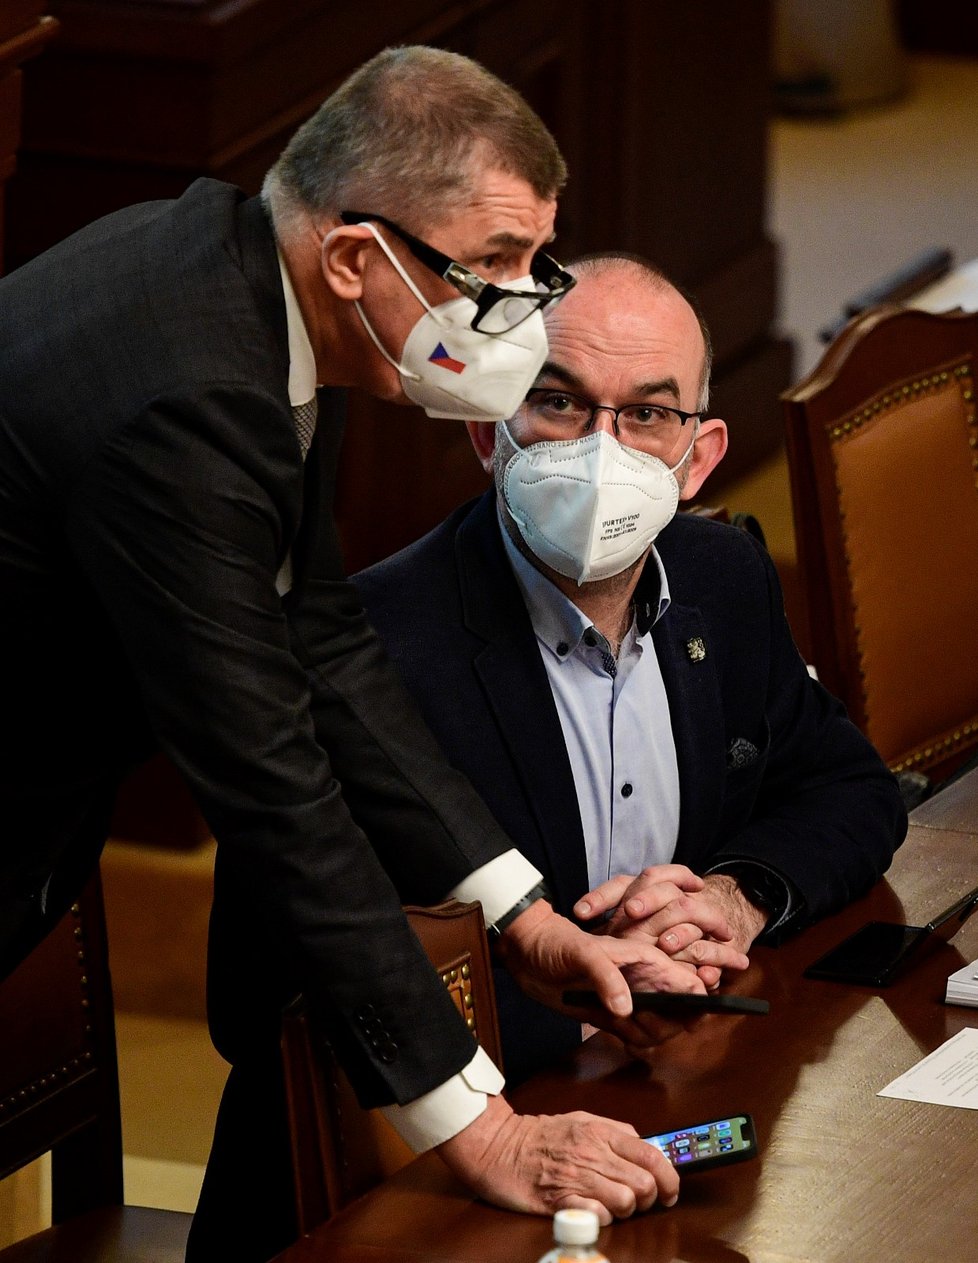 Premiér Andrej Babiš (ANO) a exministr zdravotnictví za ANO Jan Blatný (vpravo) na schůzi Poslanecké sněmovny (26. 3. 2021)